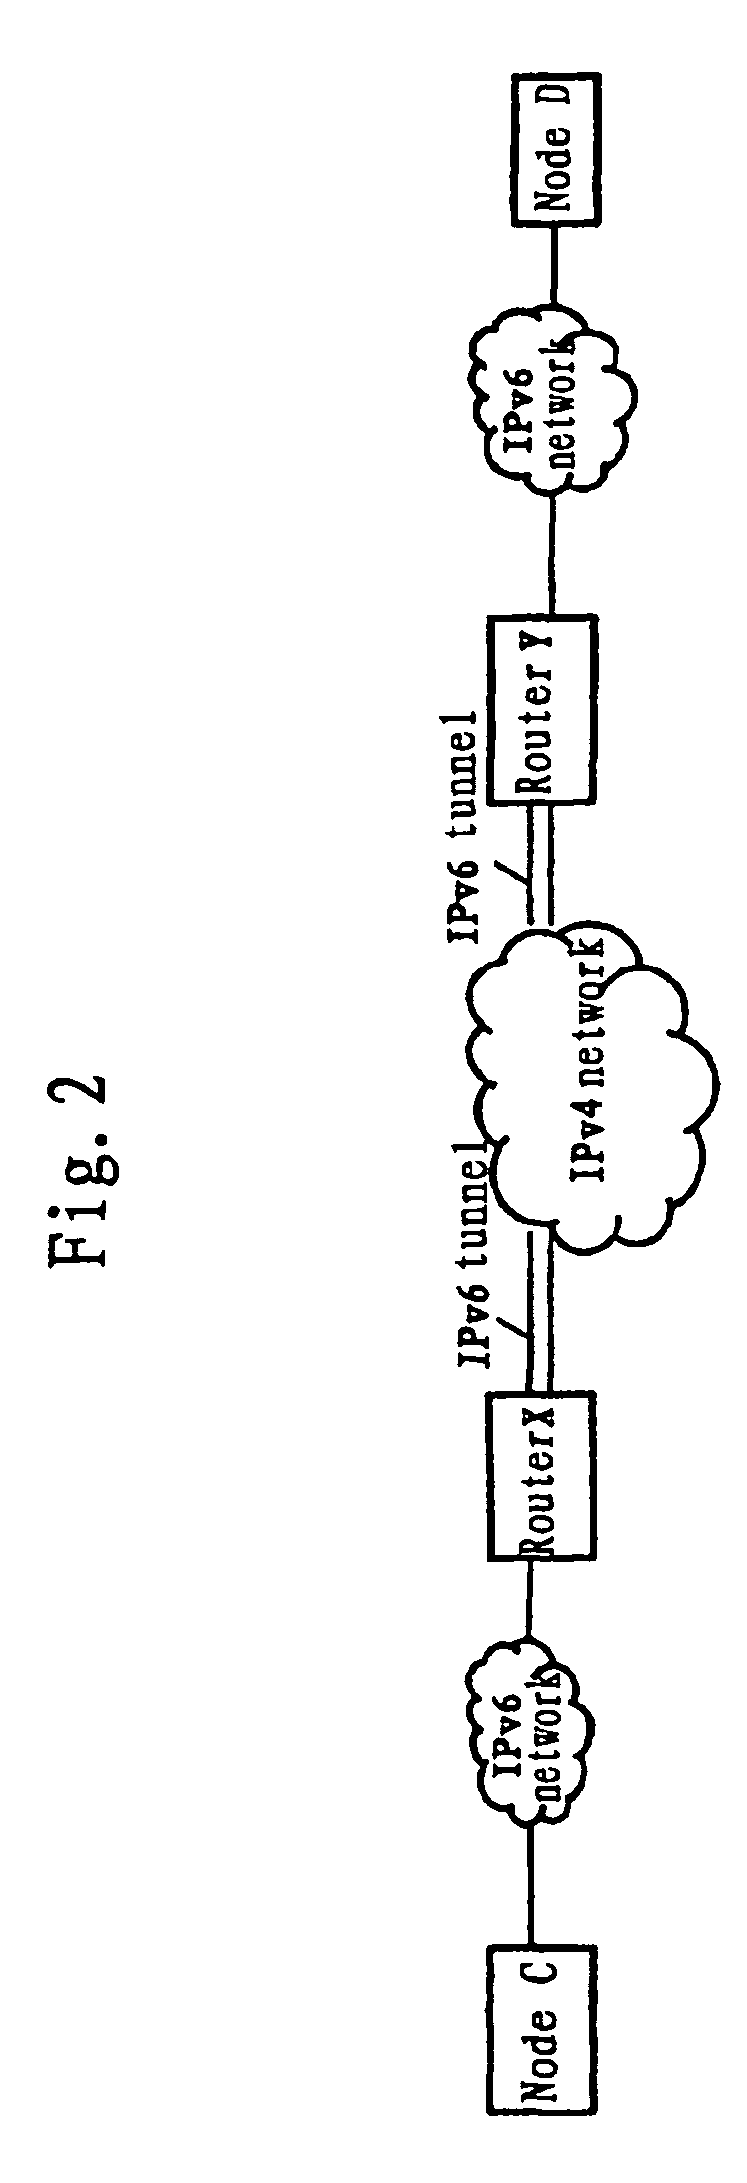 Traffic balancing apparatus and method, and network forwarding apparatus and method using the same